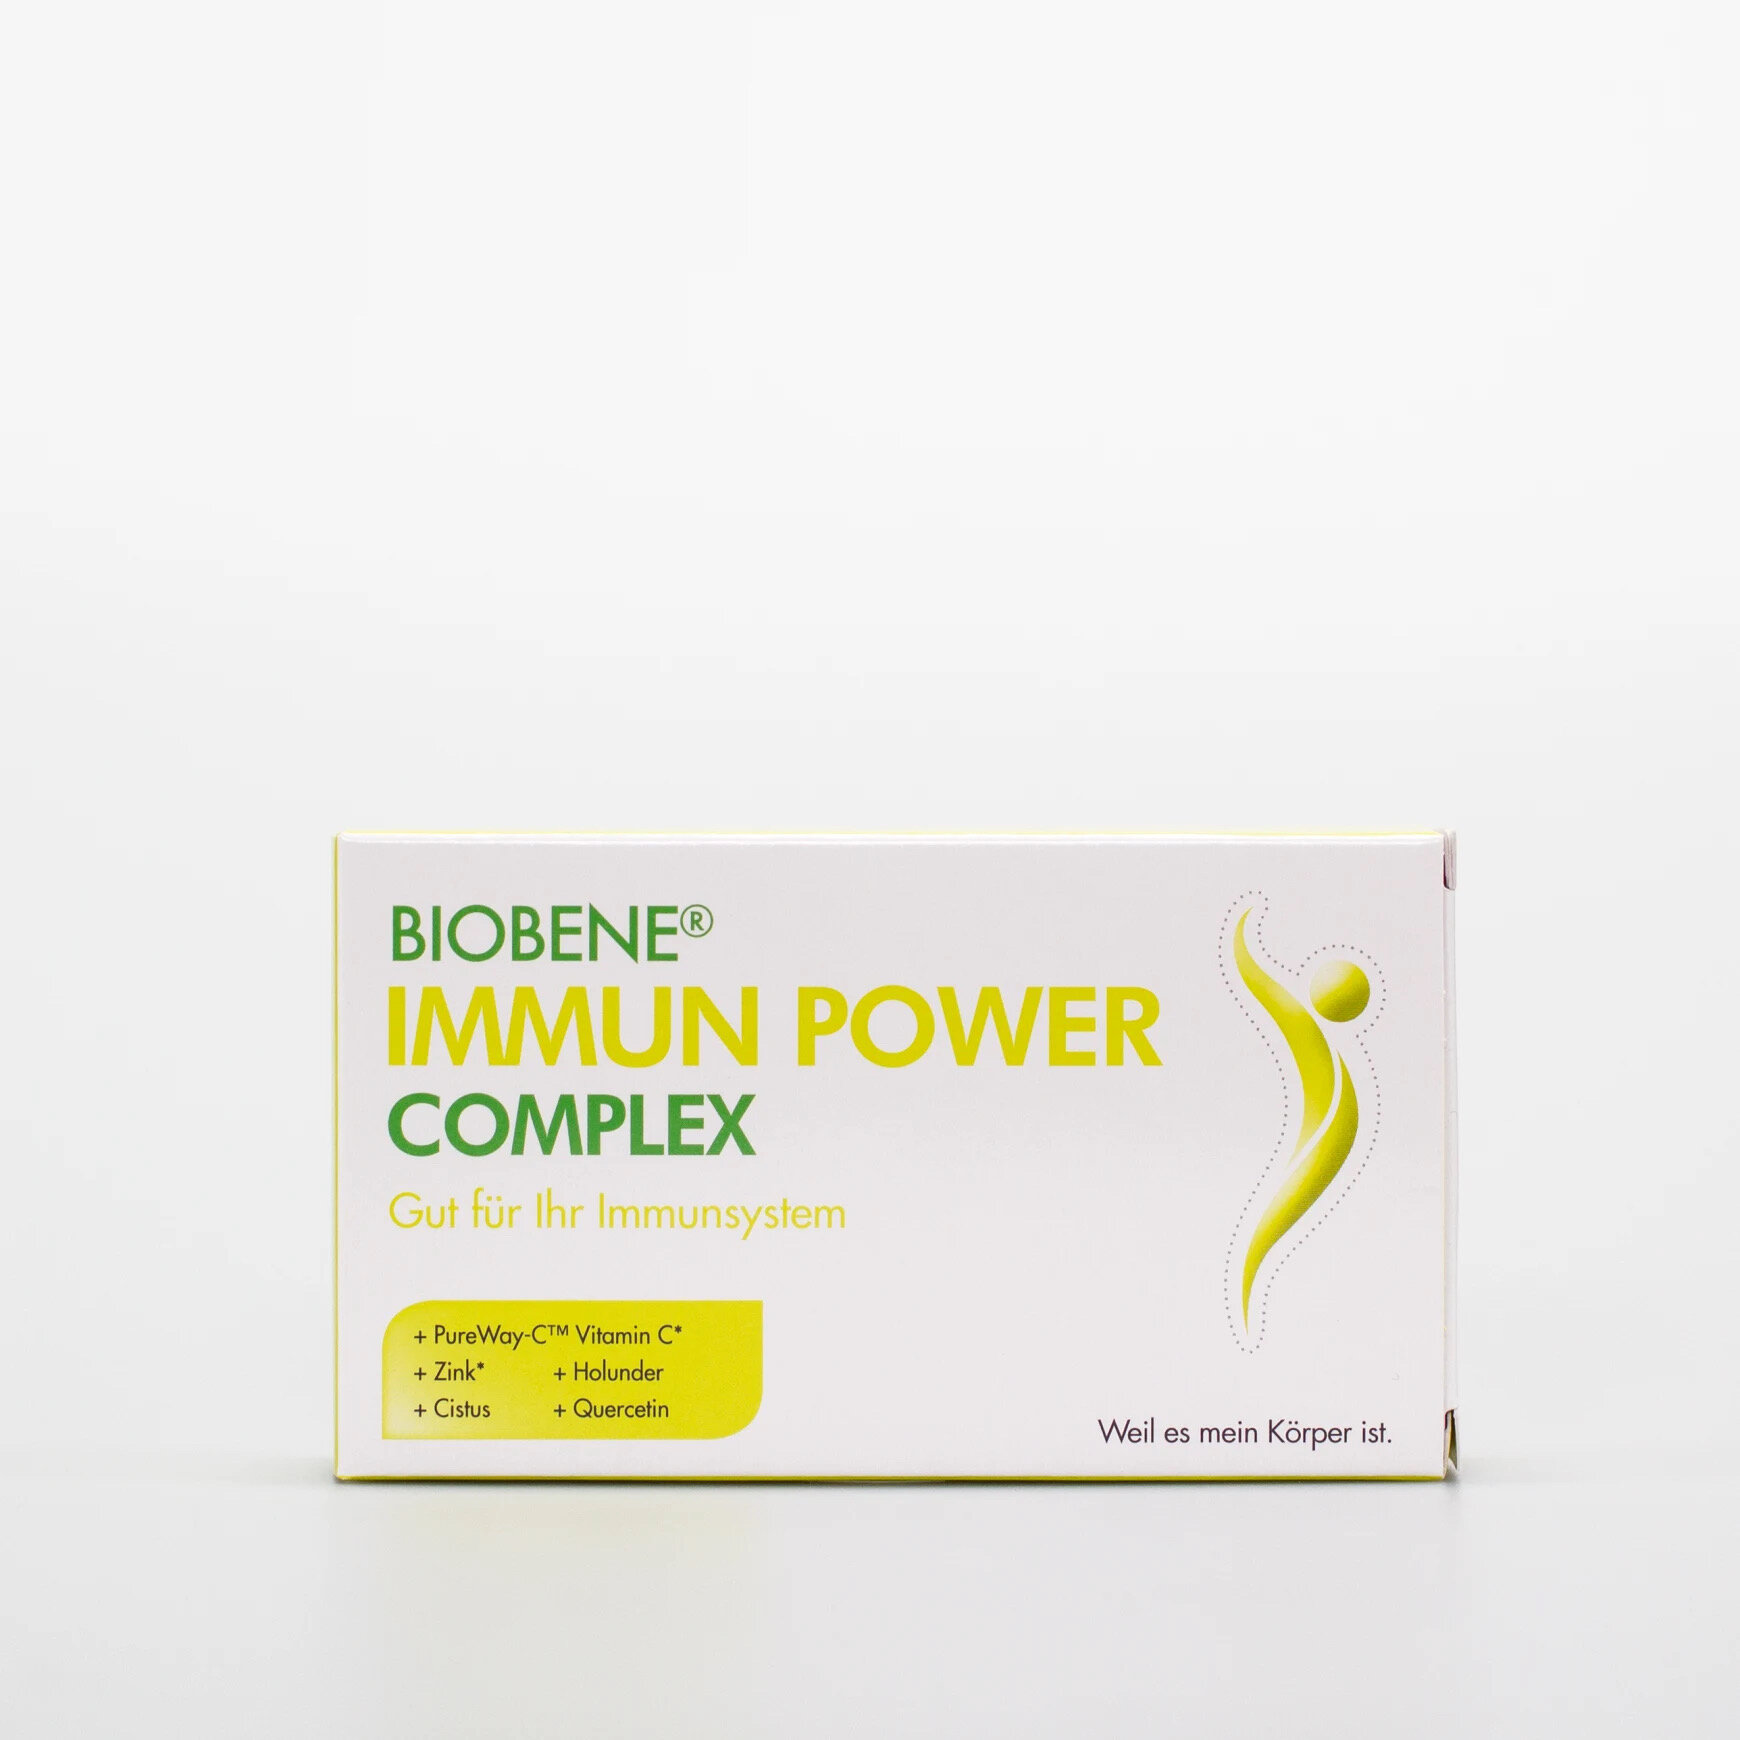 Biobene Immun Power Complex